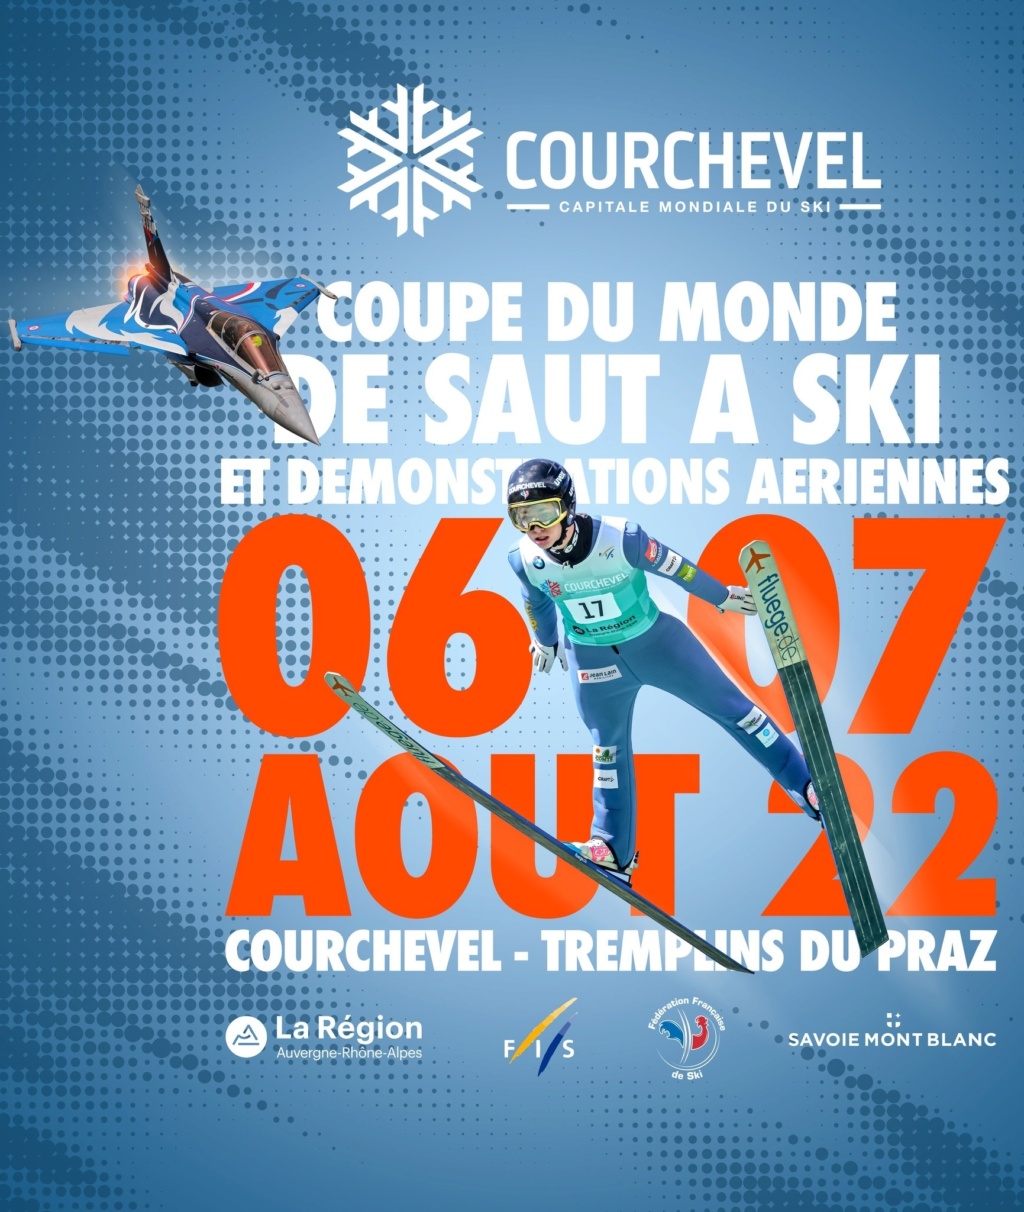 Saut à Ski et Voltige Aerienne Courchevel rafale solo display meeting aerien 2022